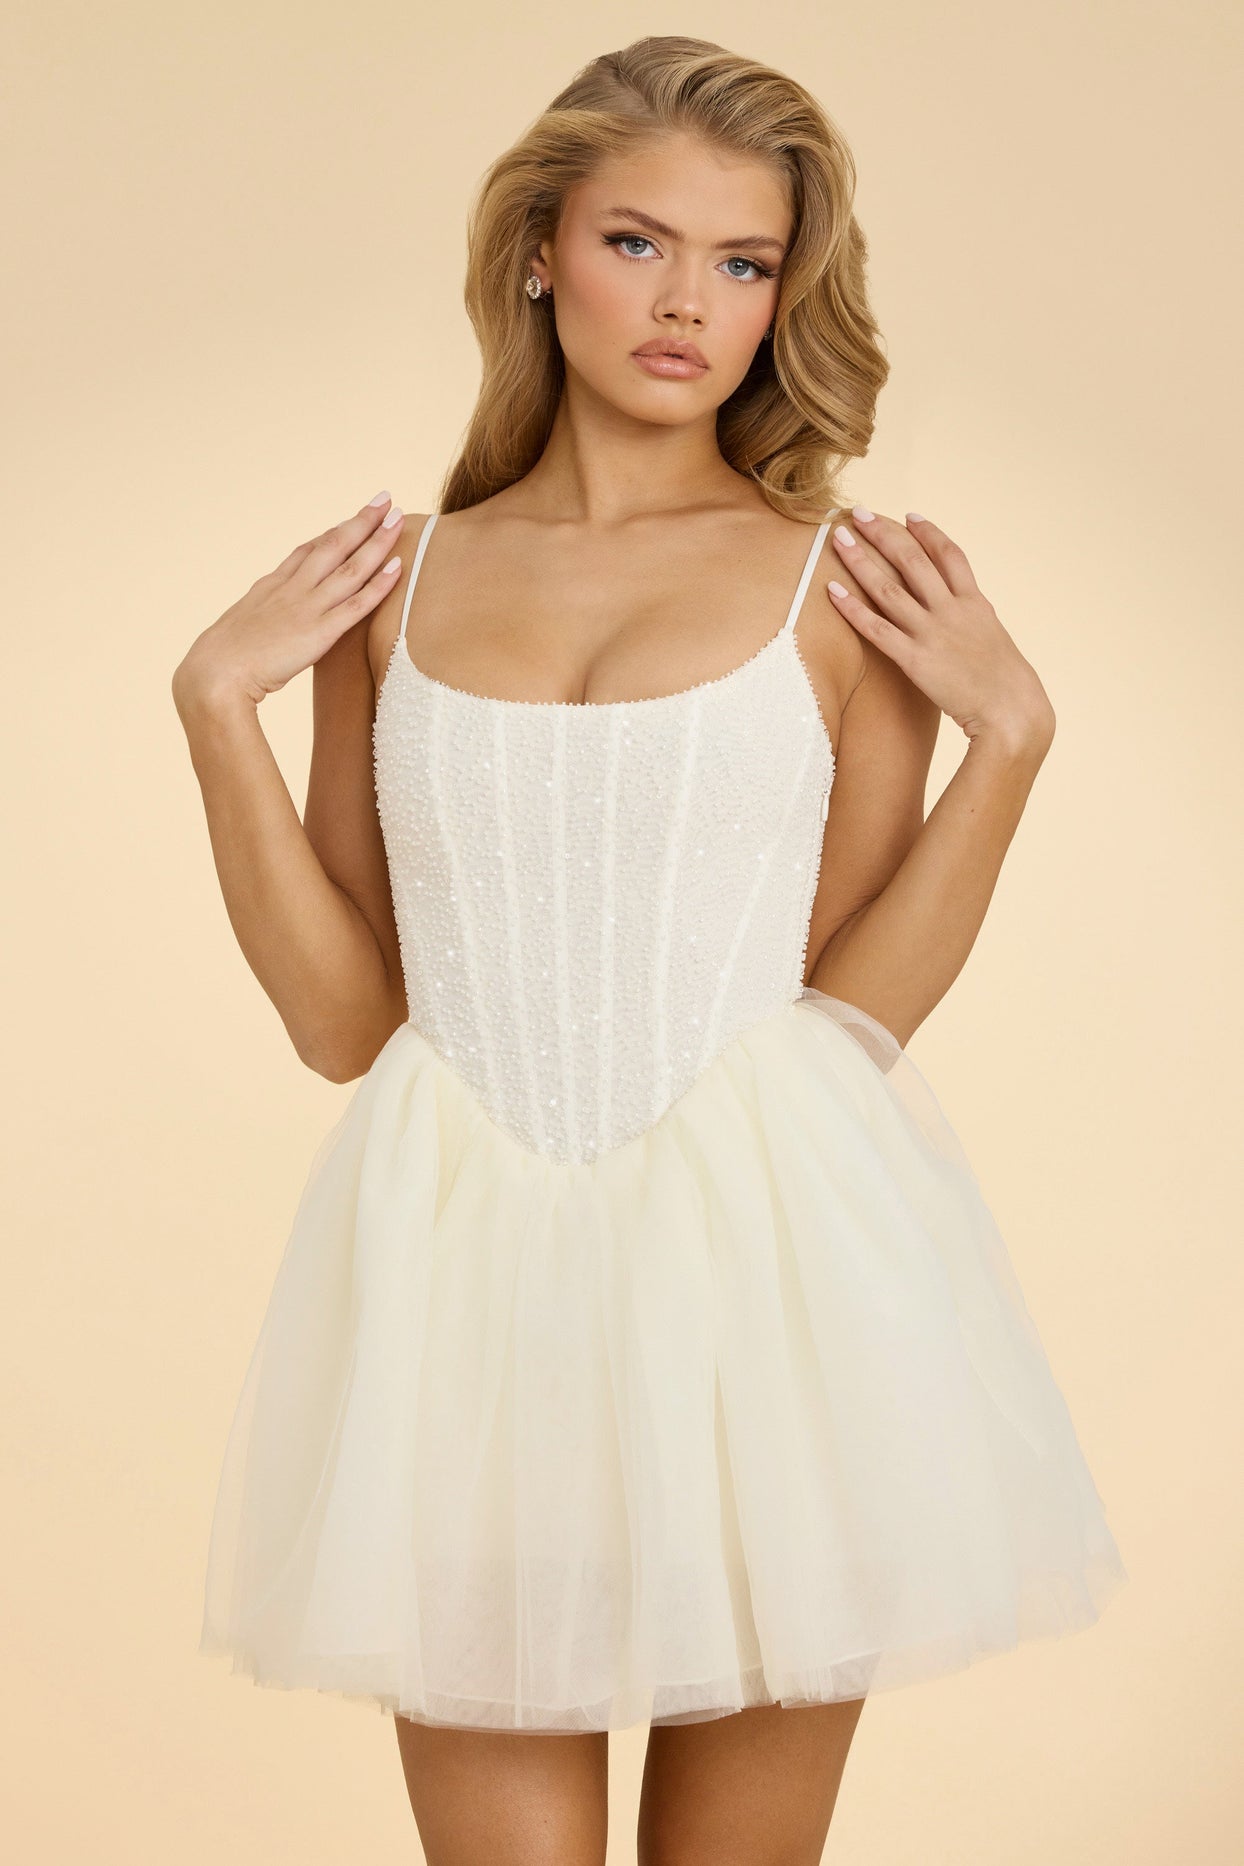 Mini-robe jupe corset en tulle ornée en blanc